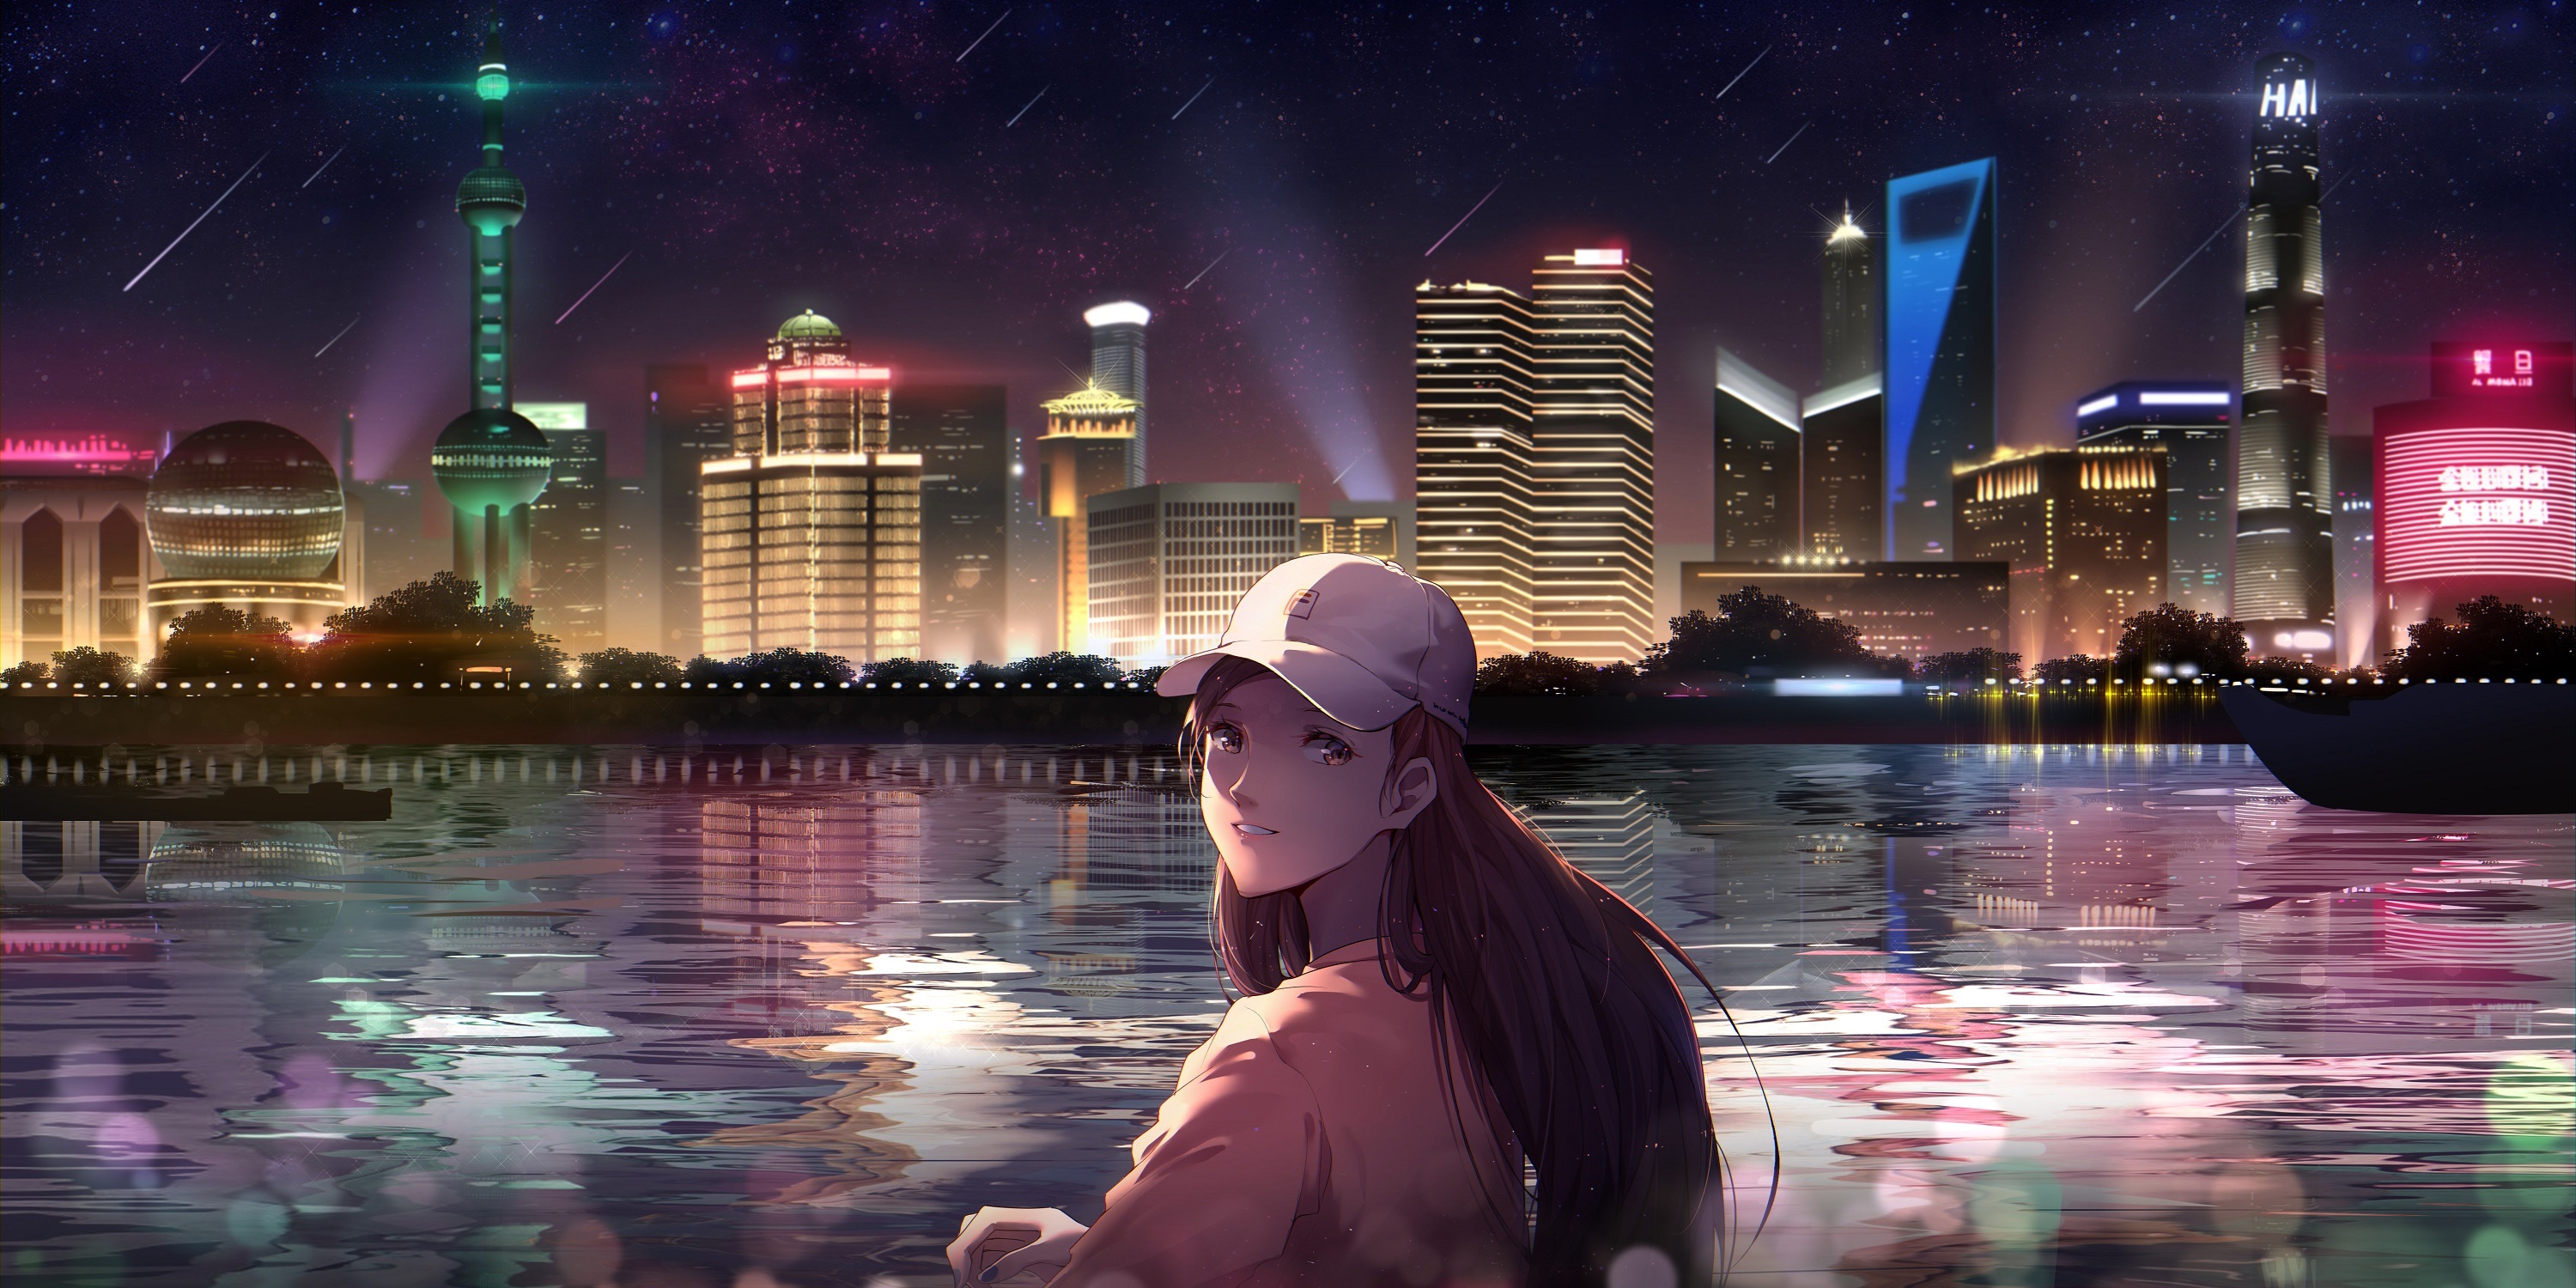 100+] Anime Night City Wallpapers